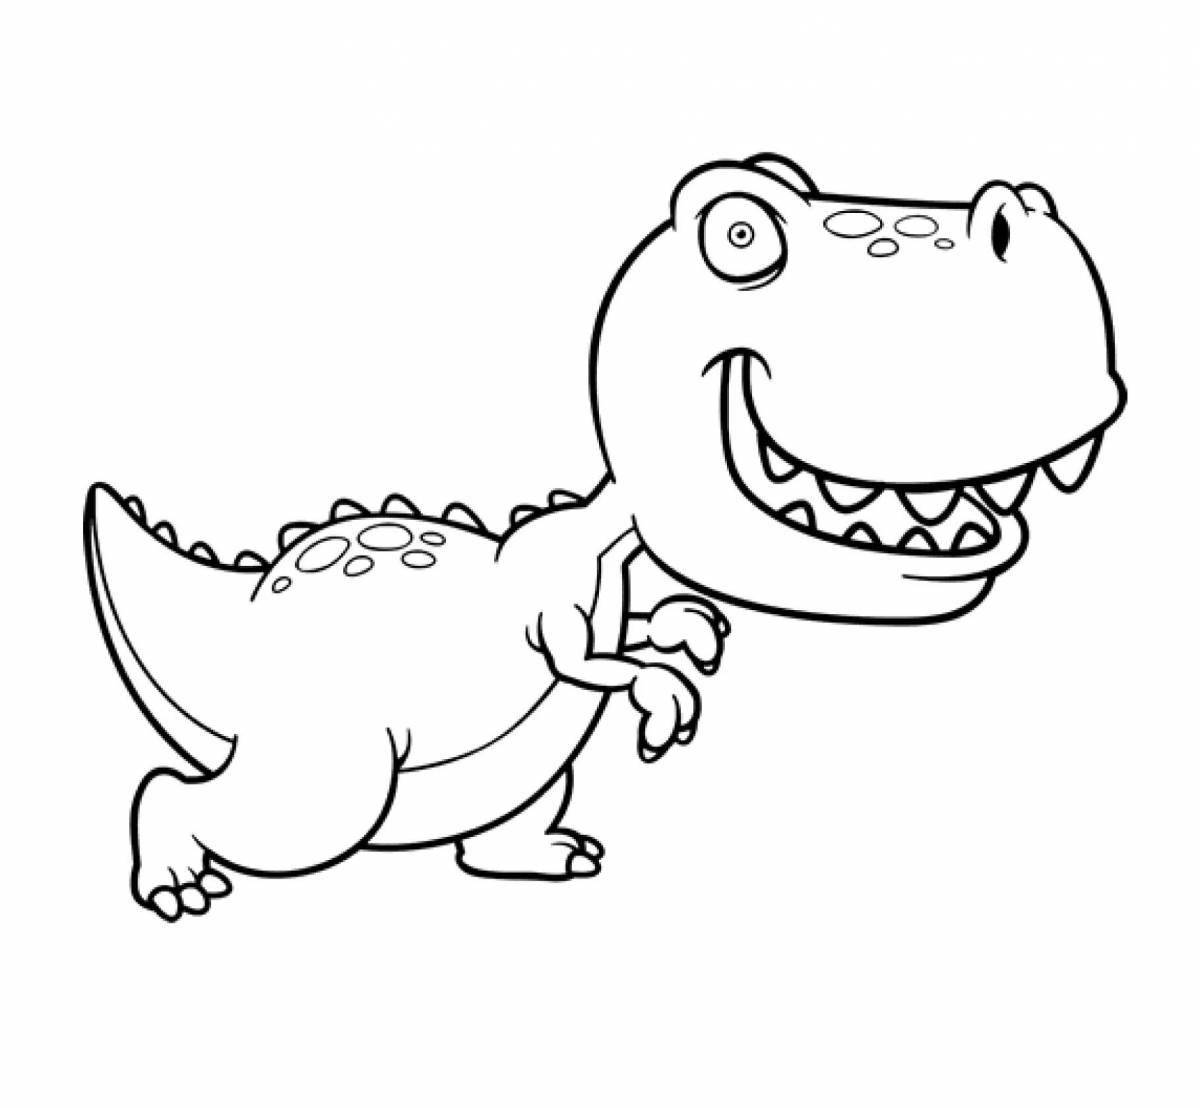 Lovely rex dinosaur coloring book for kids